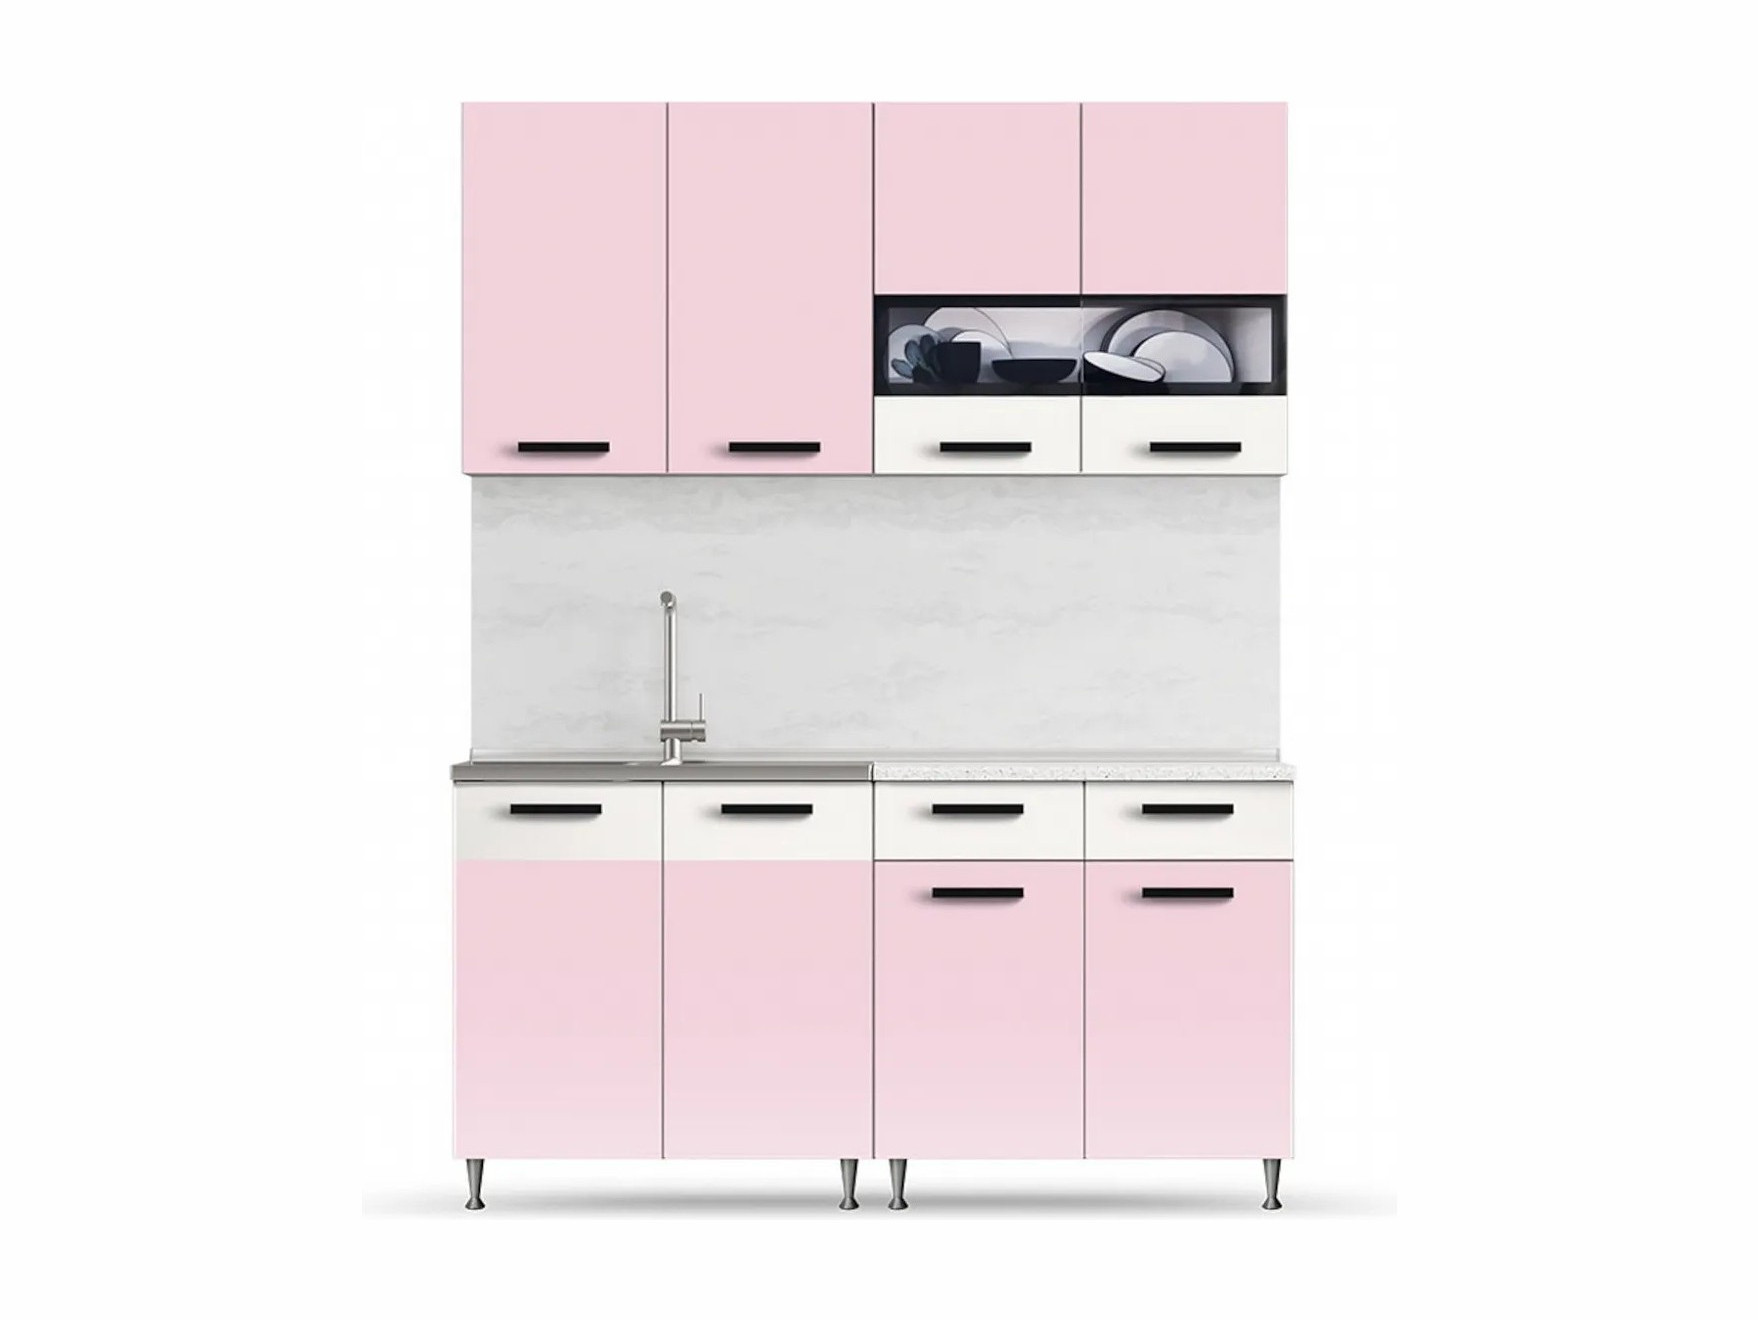 Кухня ЛДСП Рио 1600 (Розовый, Белый) Розовый, Белый, ЛДСП кухня лдсп рио 1000 розовый белый розовый белый лдсп